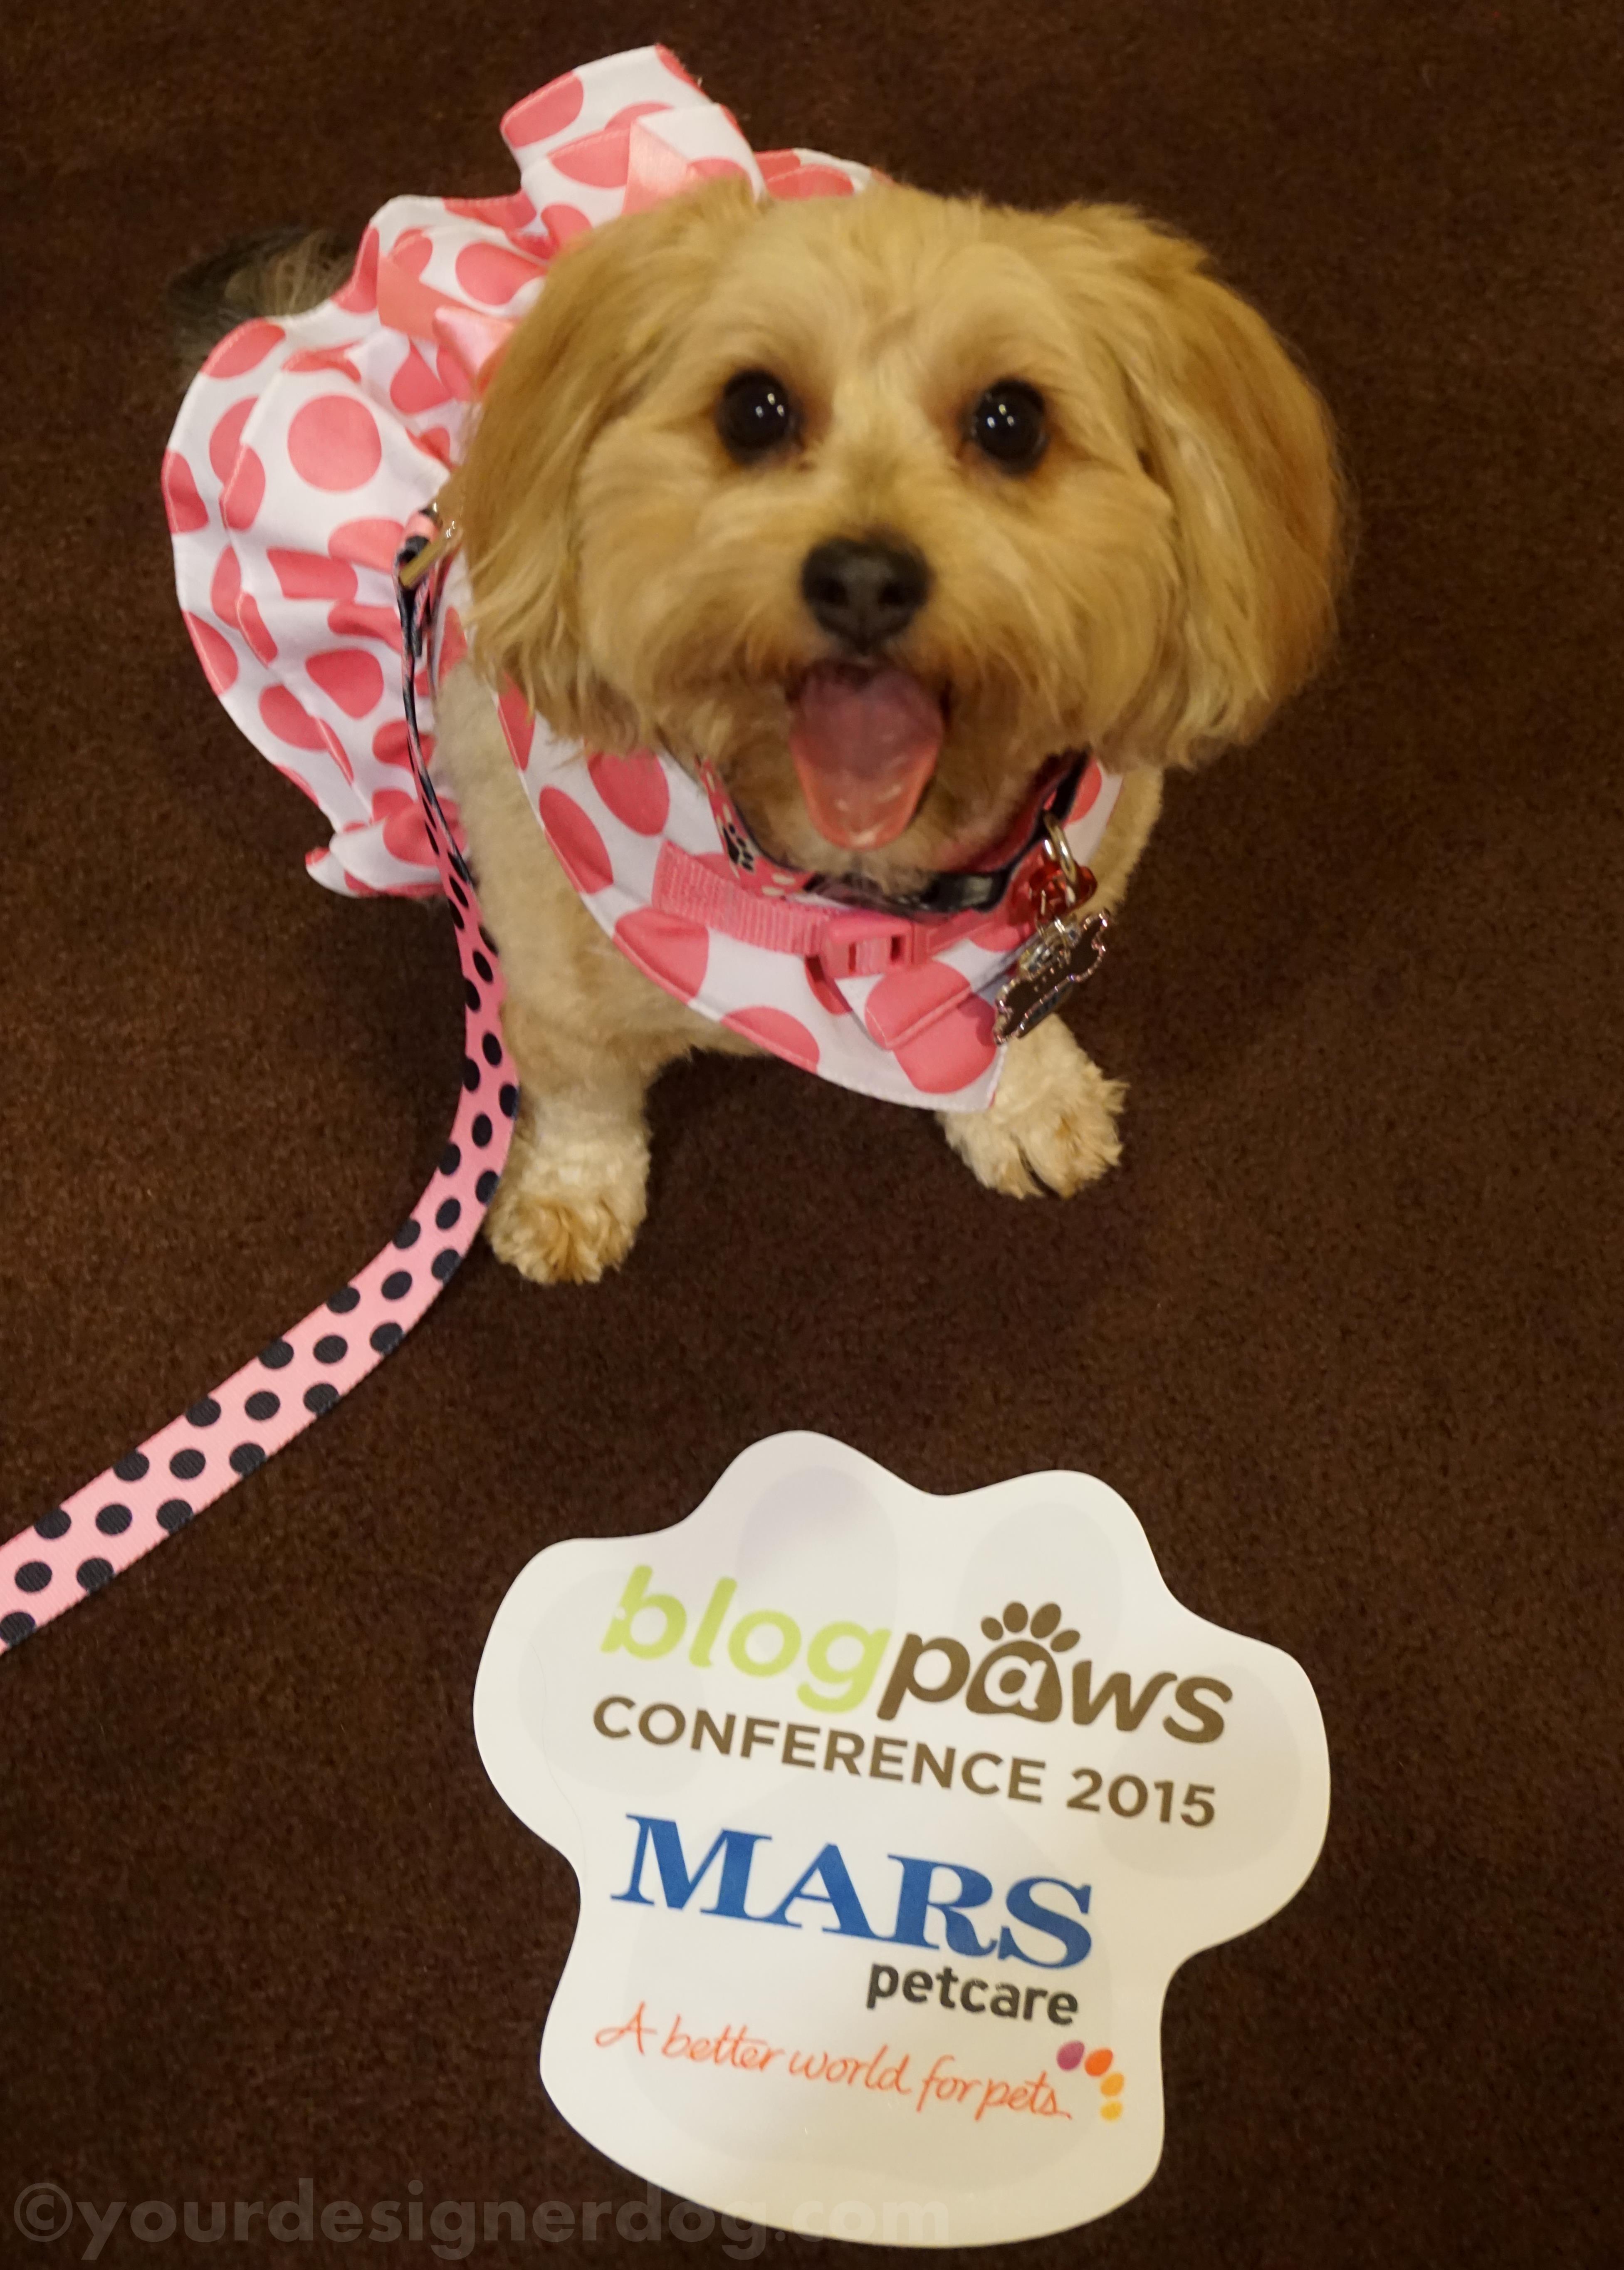 dogs, designer dogs, yorkipoo, yorkie poo, blogpaws, blogging conference